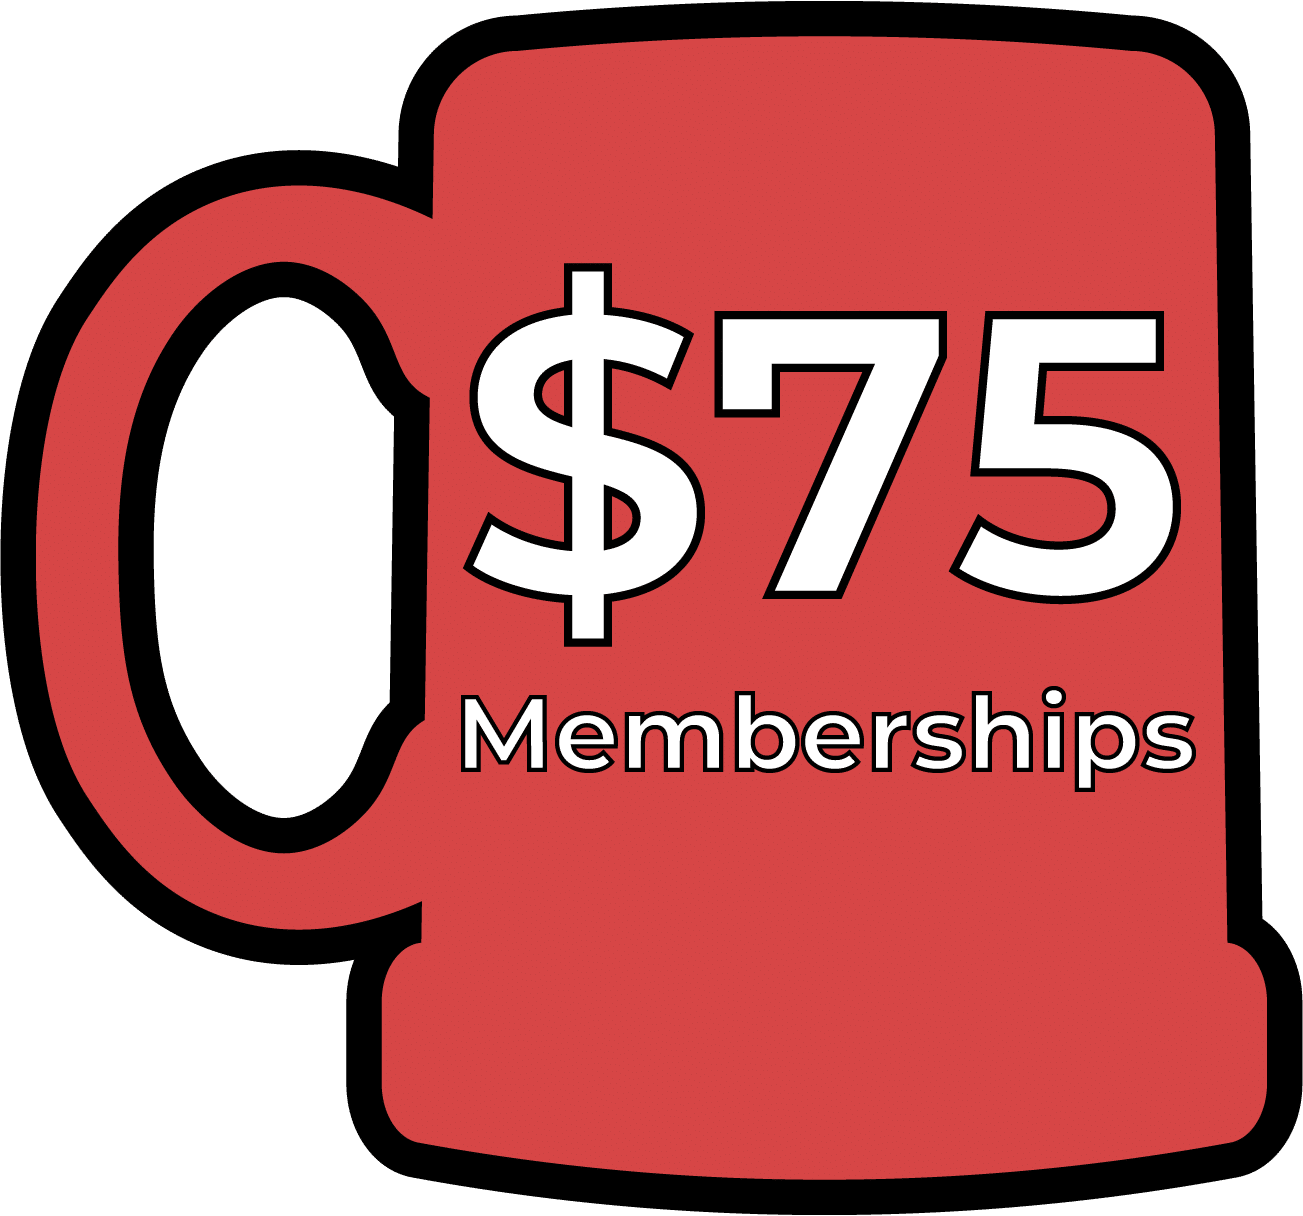 $75 Membership to join Mug Club